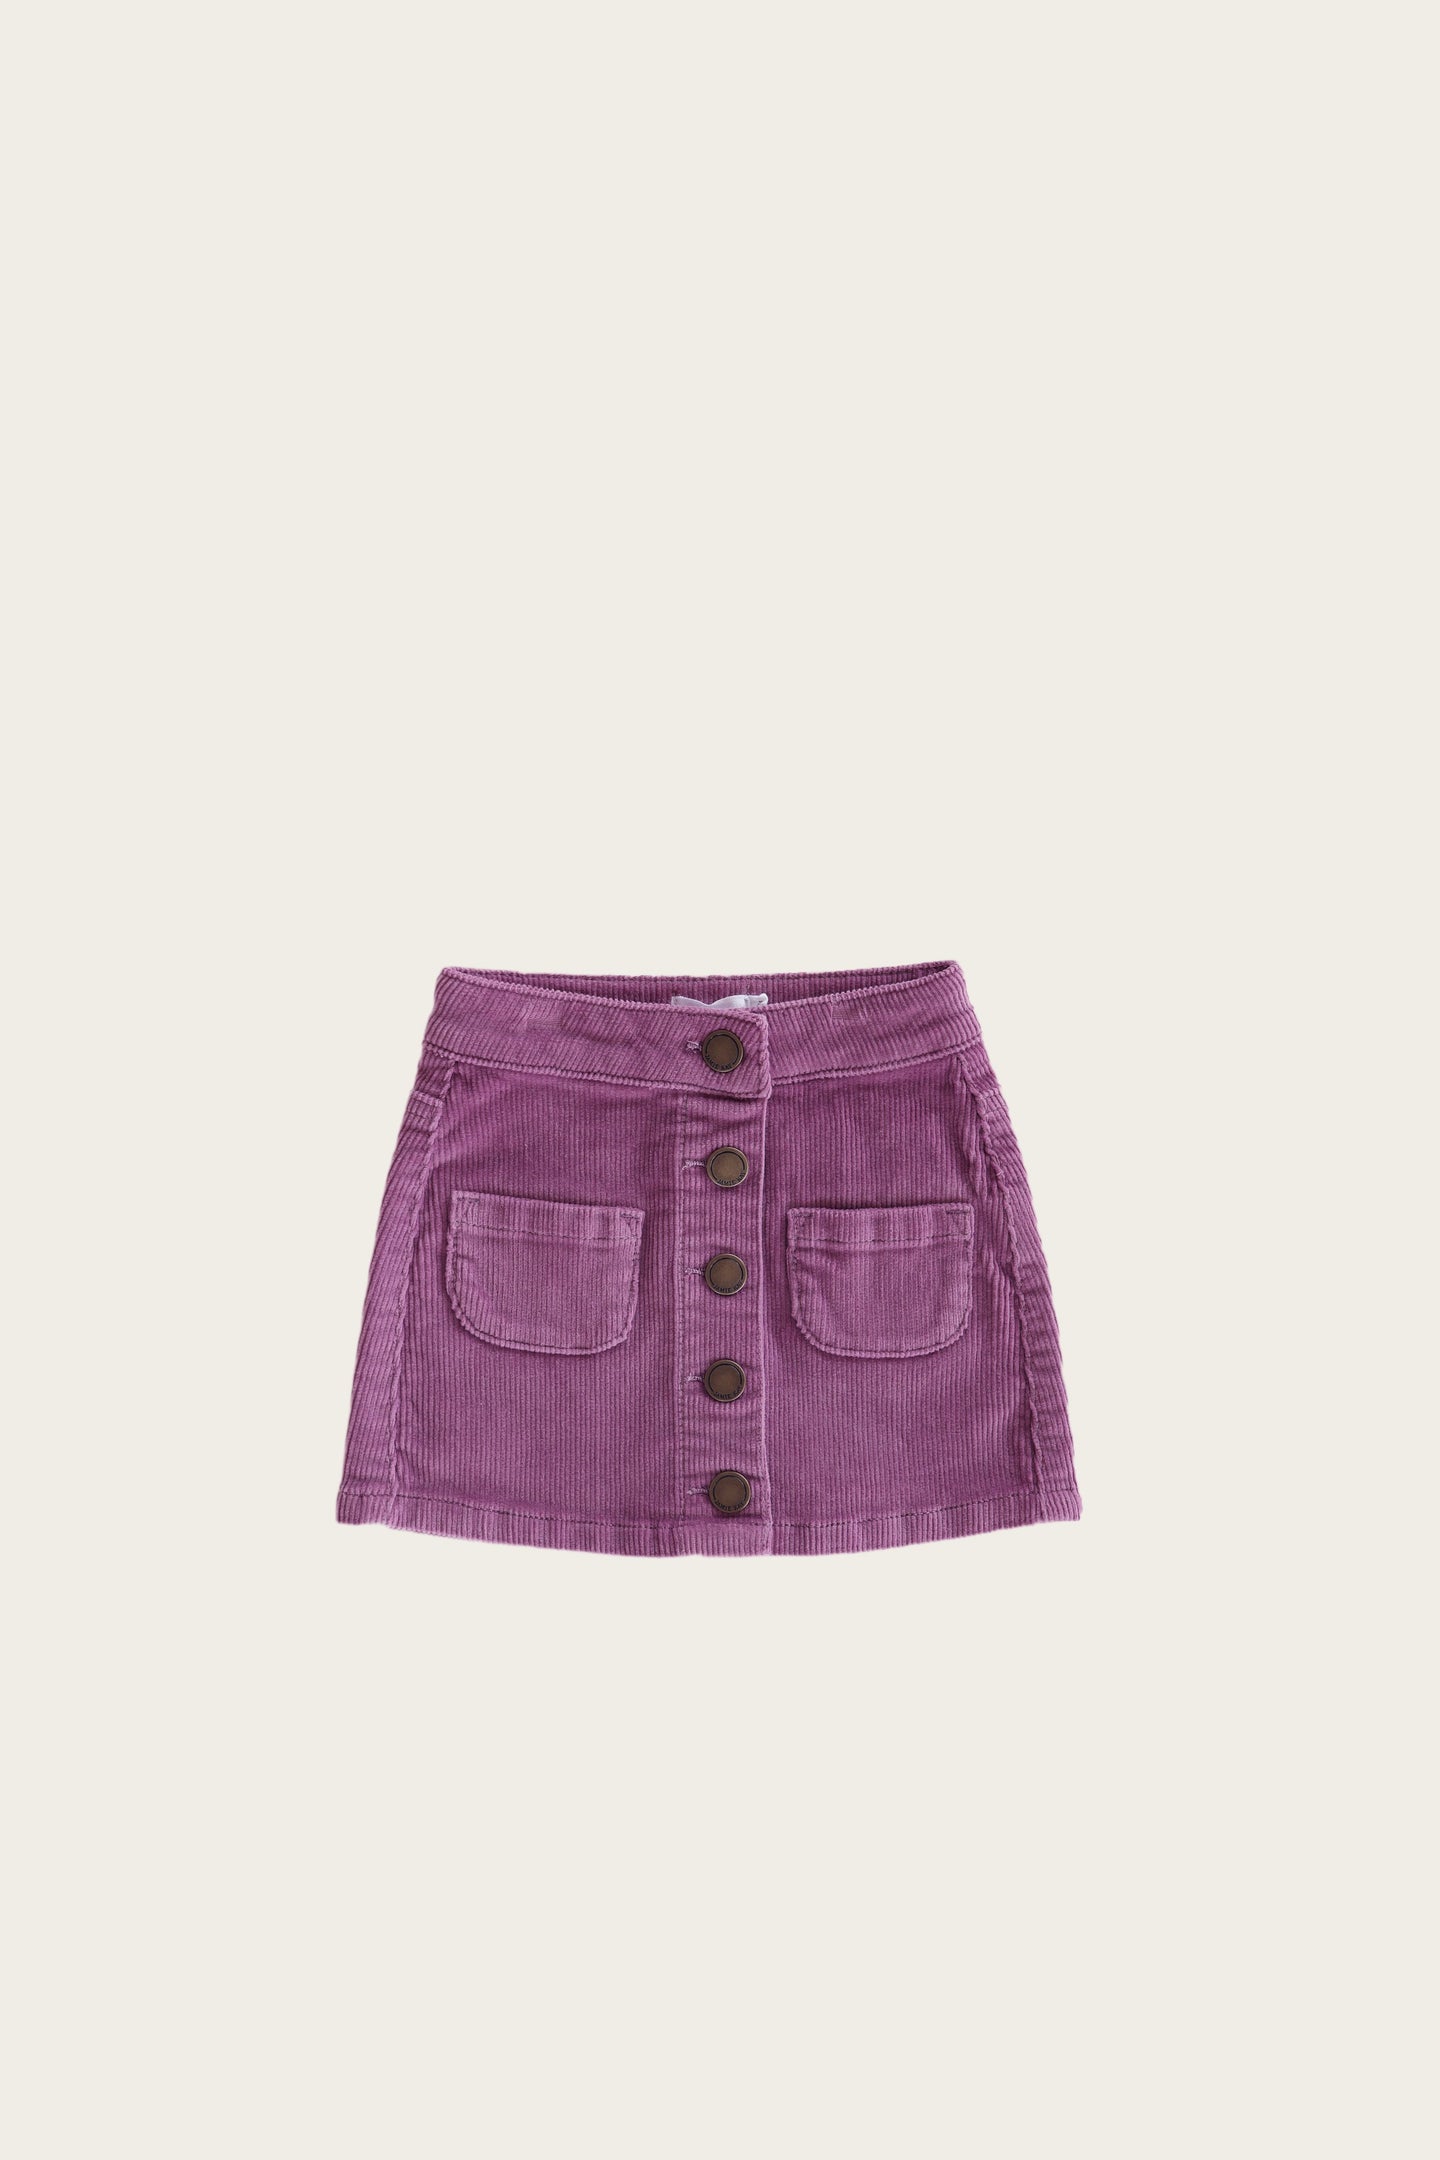 Jamie Kay - Ava Cord Skirt - Lavender